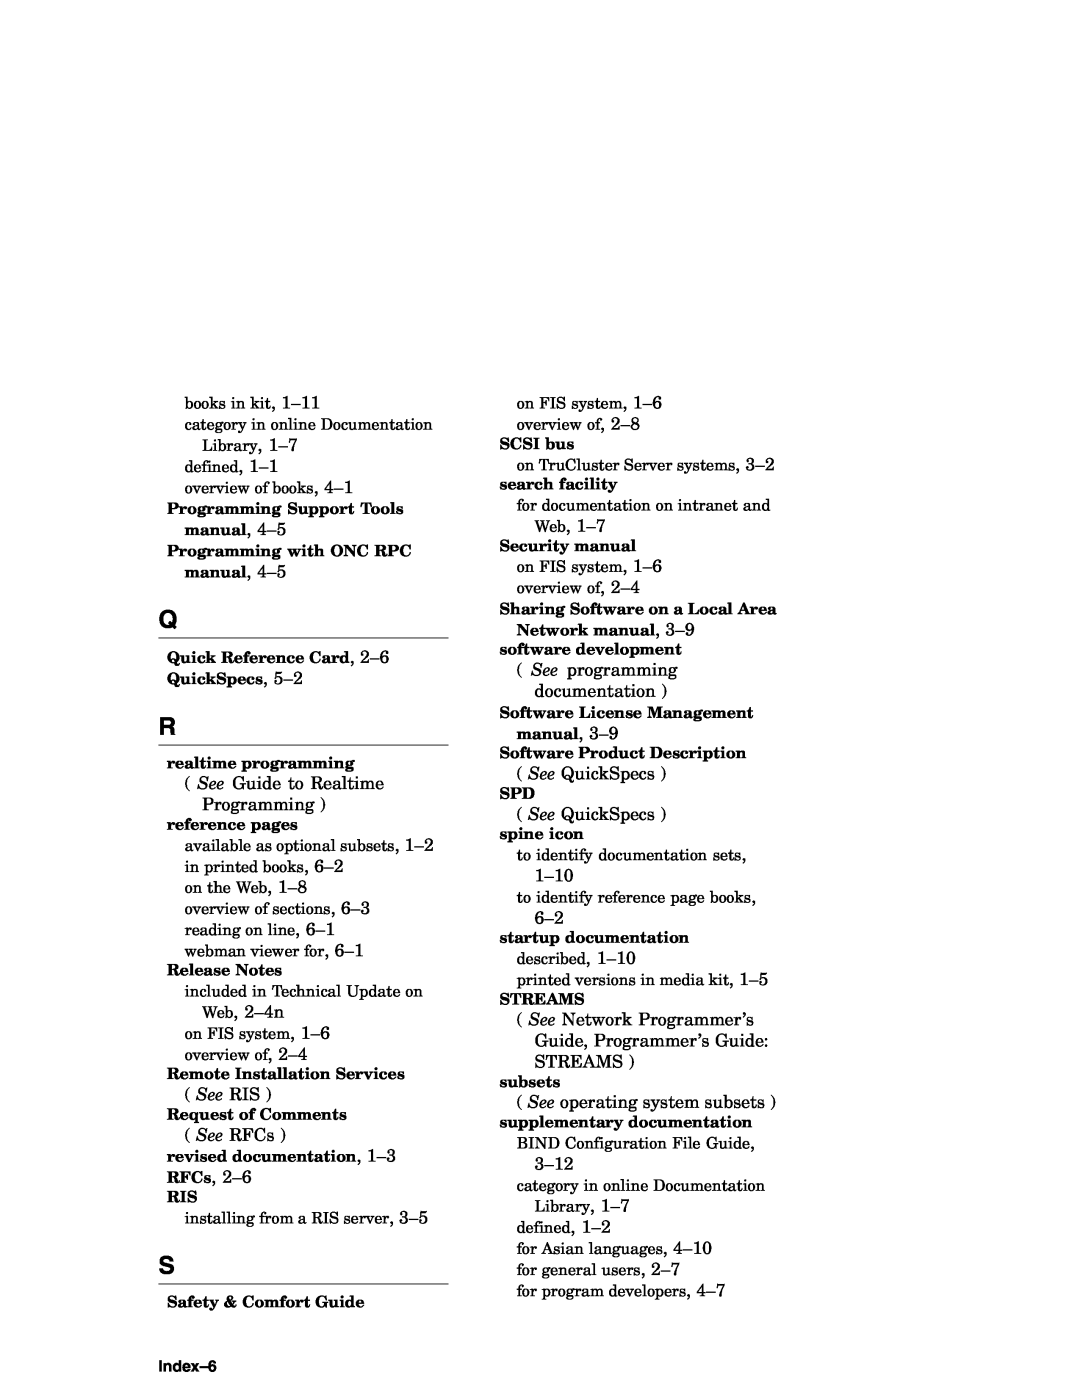 Compaq AA-RH8RD-TE manual Index-6 